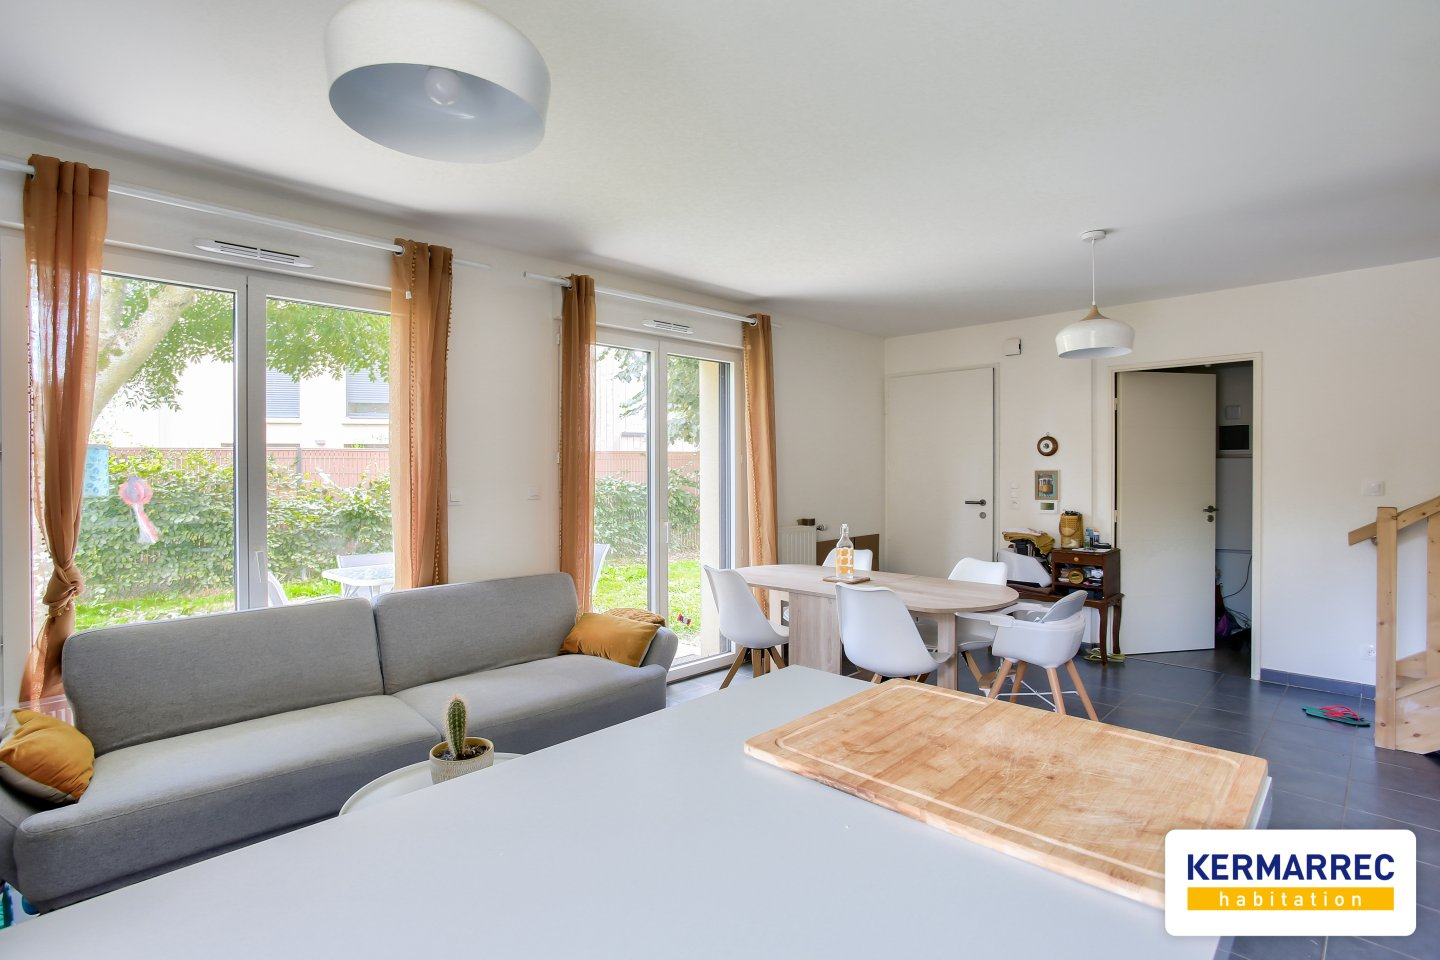 Appartement 4 pièces - 63 m² environ - 53525280g.jpg | Kermarrec Habitation